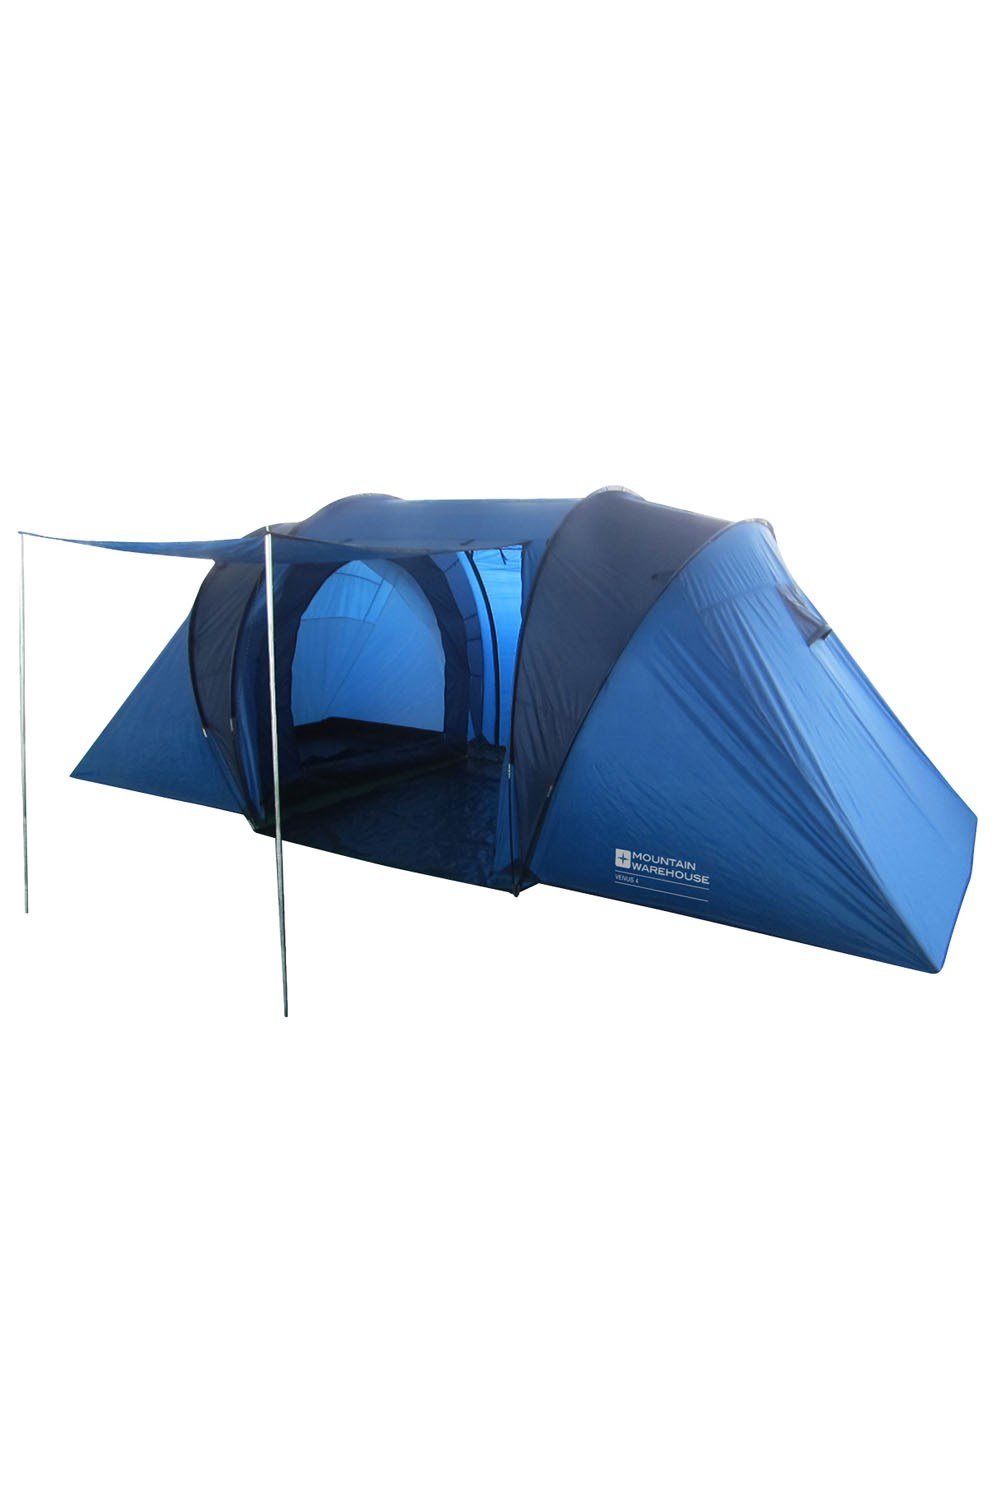 Mountain Warehouse Uni Pop Up Short Sleeve 2 Man Tent Tent 